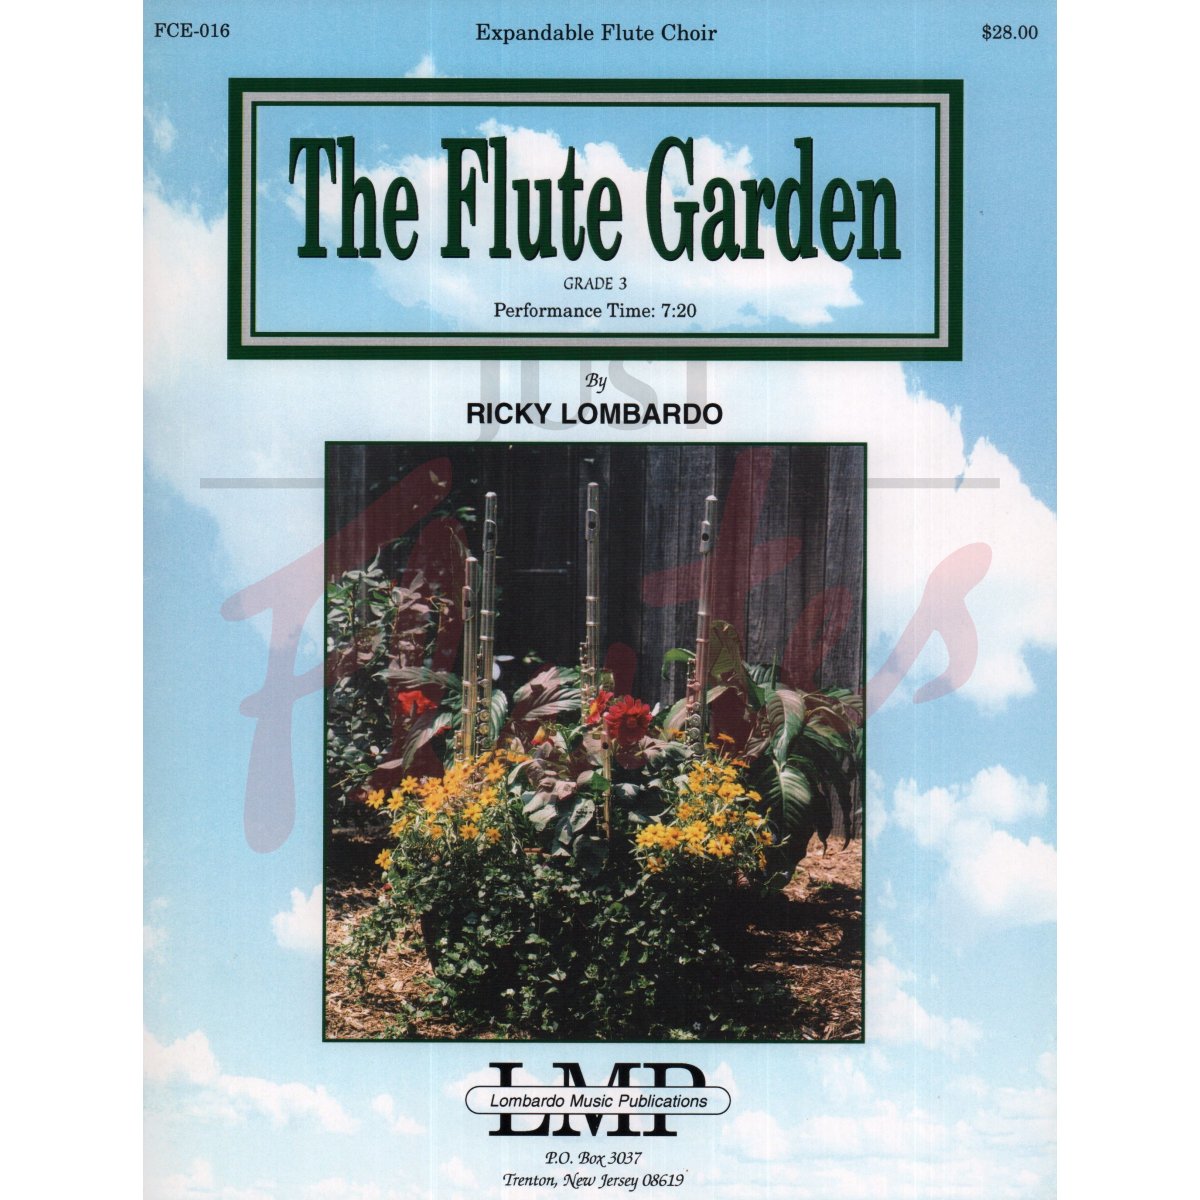 The Flute Garden for Expandable Flute Choir